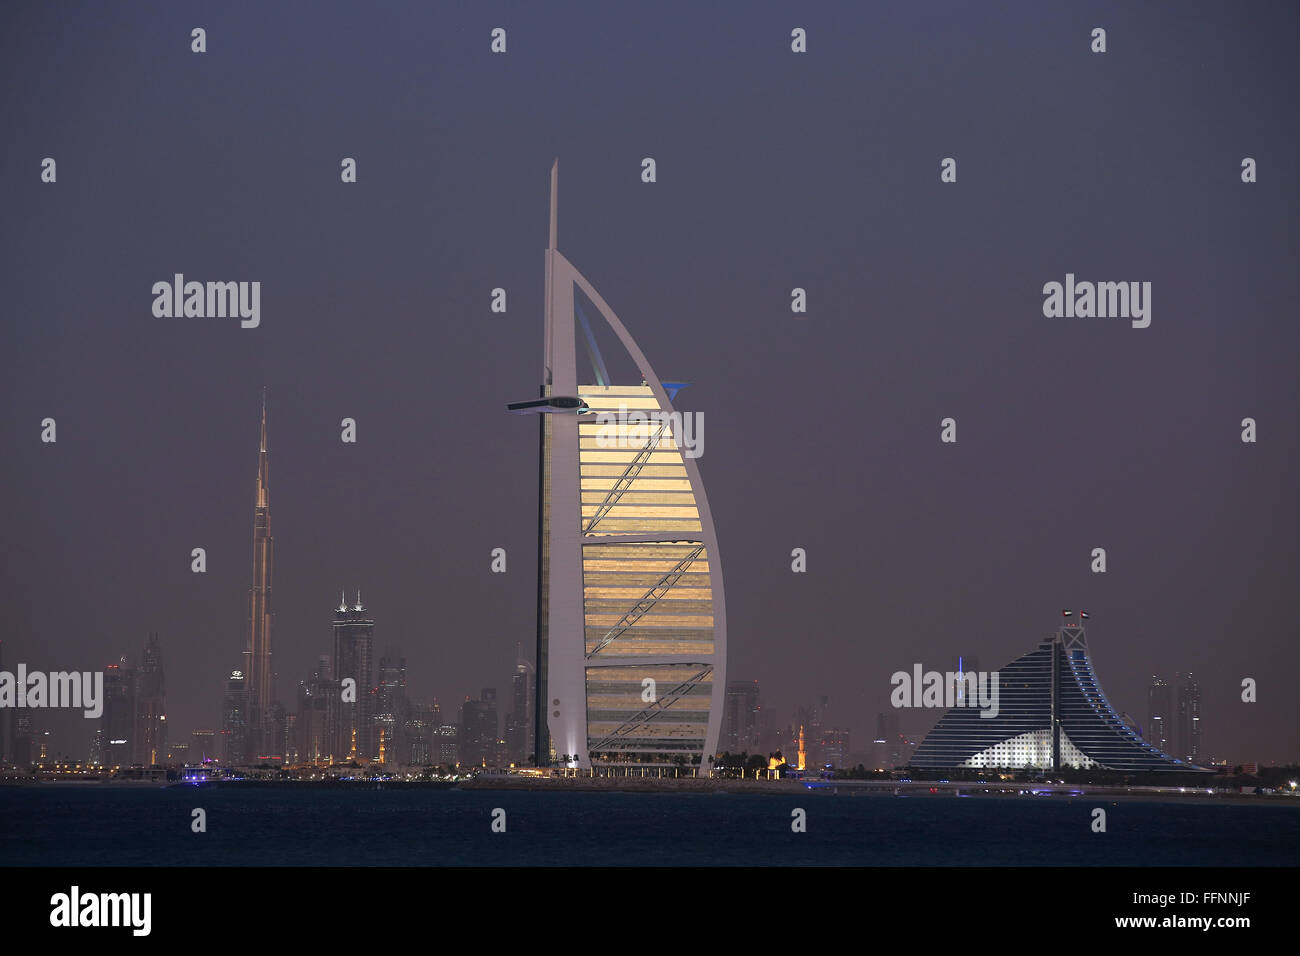 The skyline of Dubai, taken from Palm Jumeirah island, UAE, 09 February 2016. PHOTO: KEVIN KUREK/DPA - NO WIRE SERVICE - Stock Photo